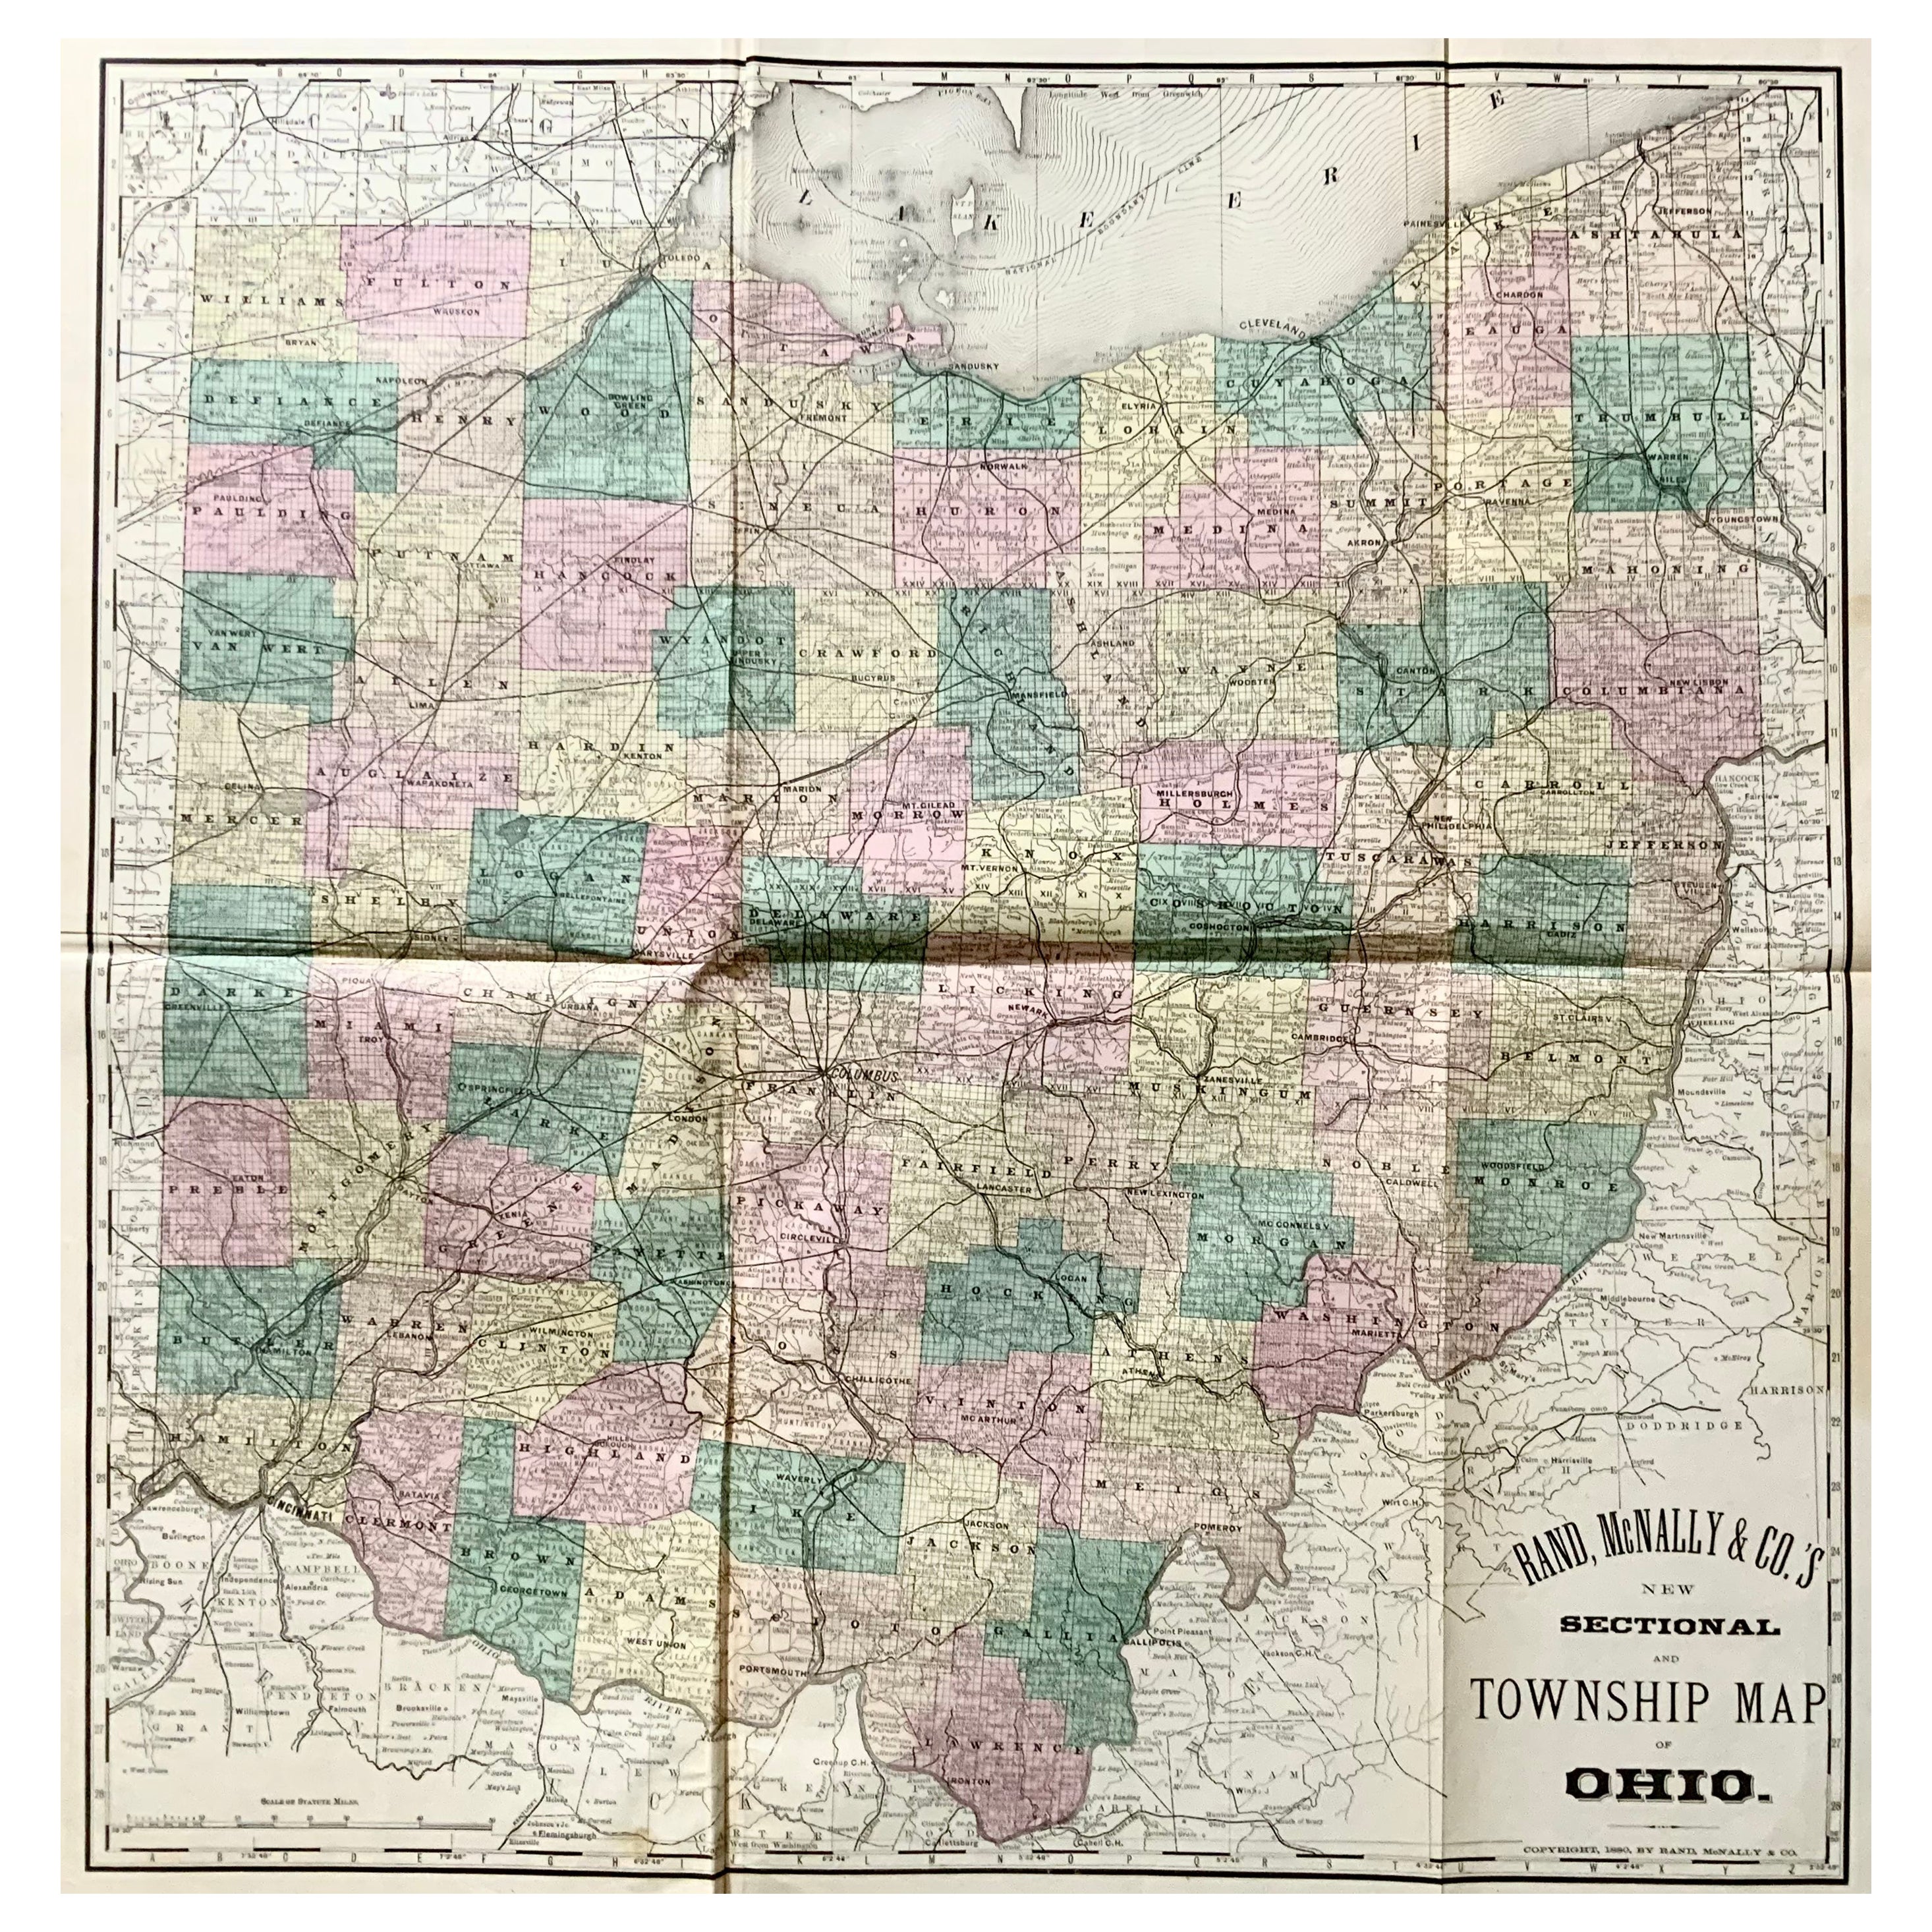 Hardesty, Sectional & Township Map of Ohio, Very Large